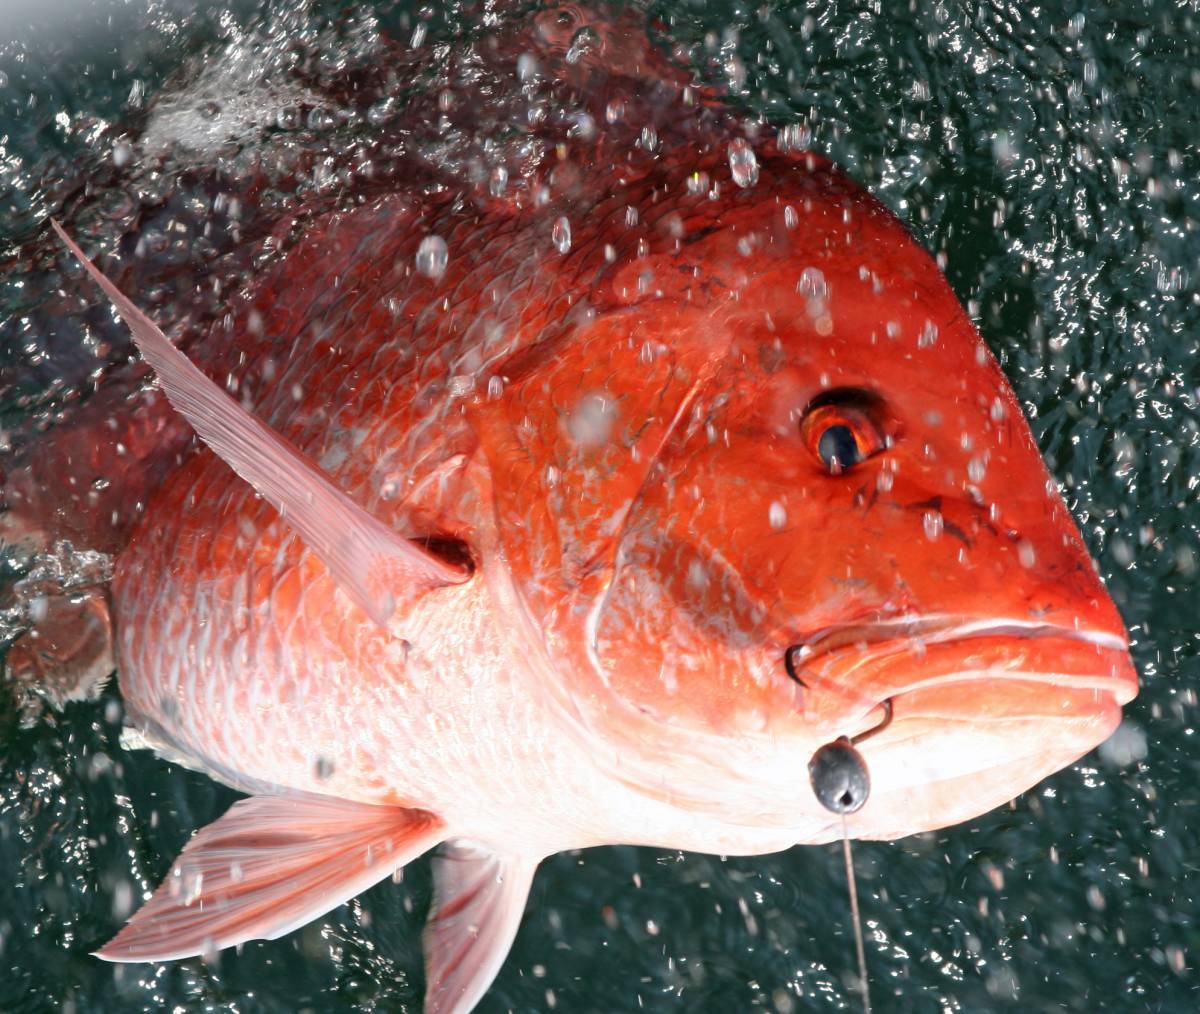 Red snapper fishing season in Alabama opens May 28 - Alabama News